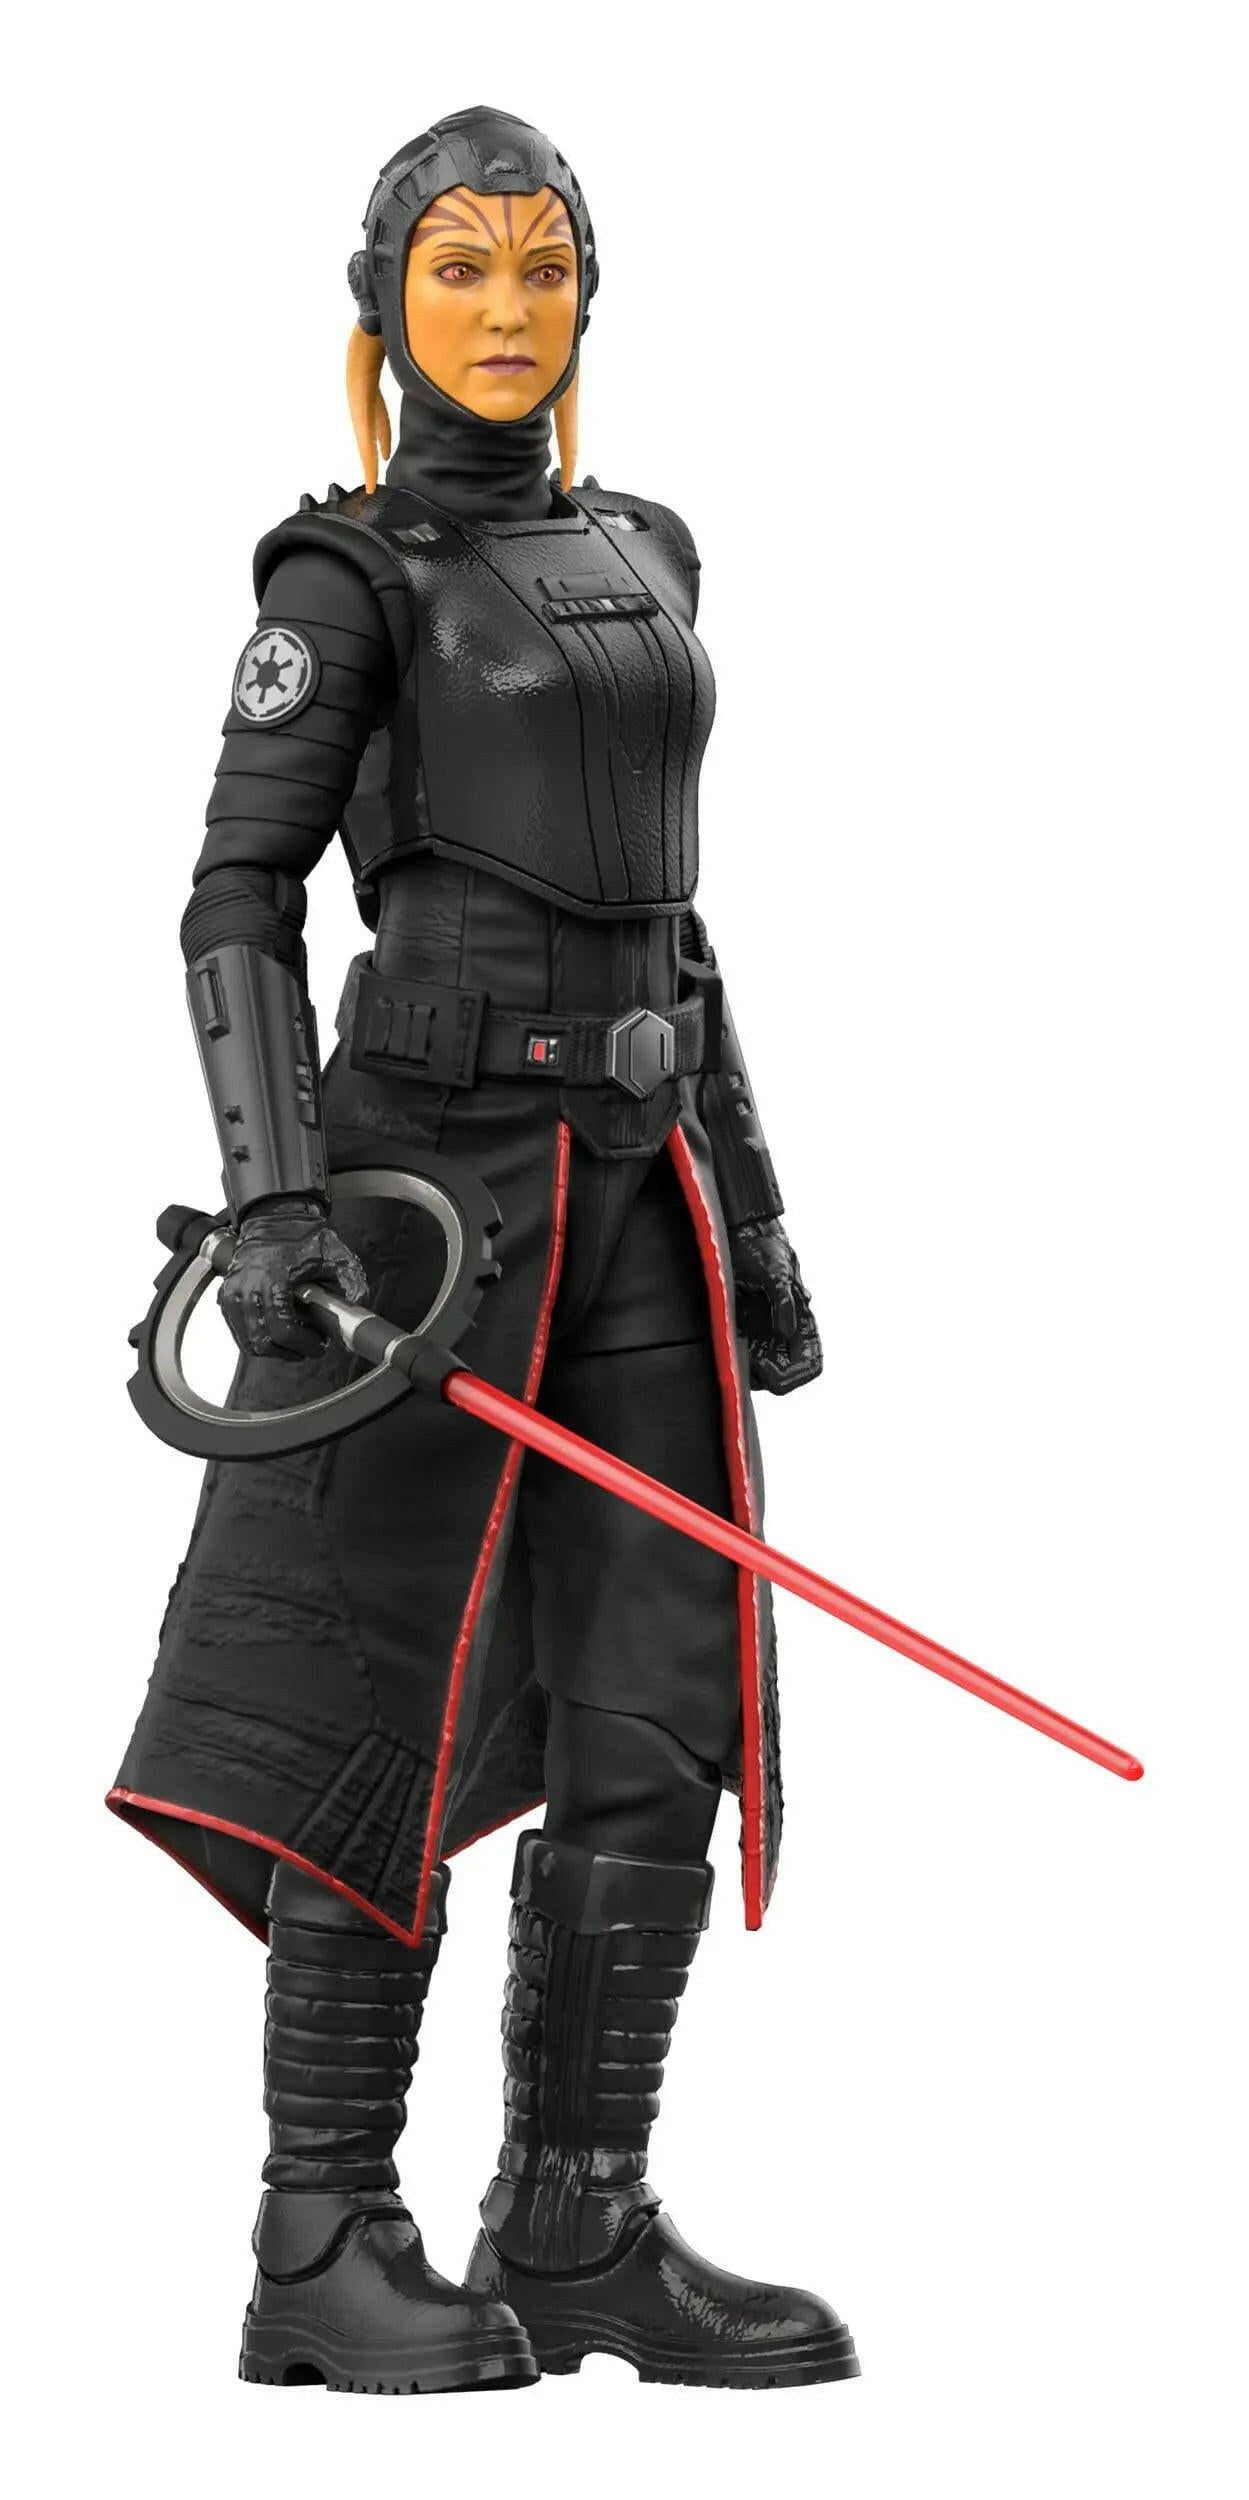 Star Wars Black Series Obi-Wan Kenobi Actionfigur Inquisitor (Fourth Sister) 15cm - Toy-Storage